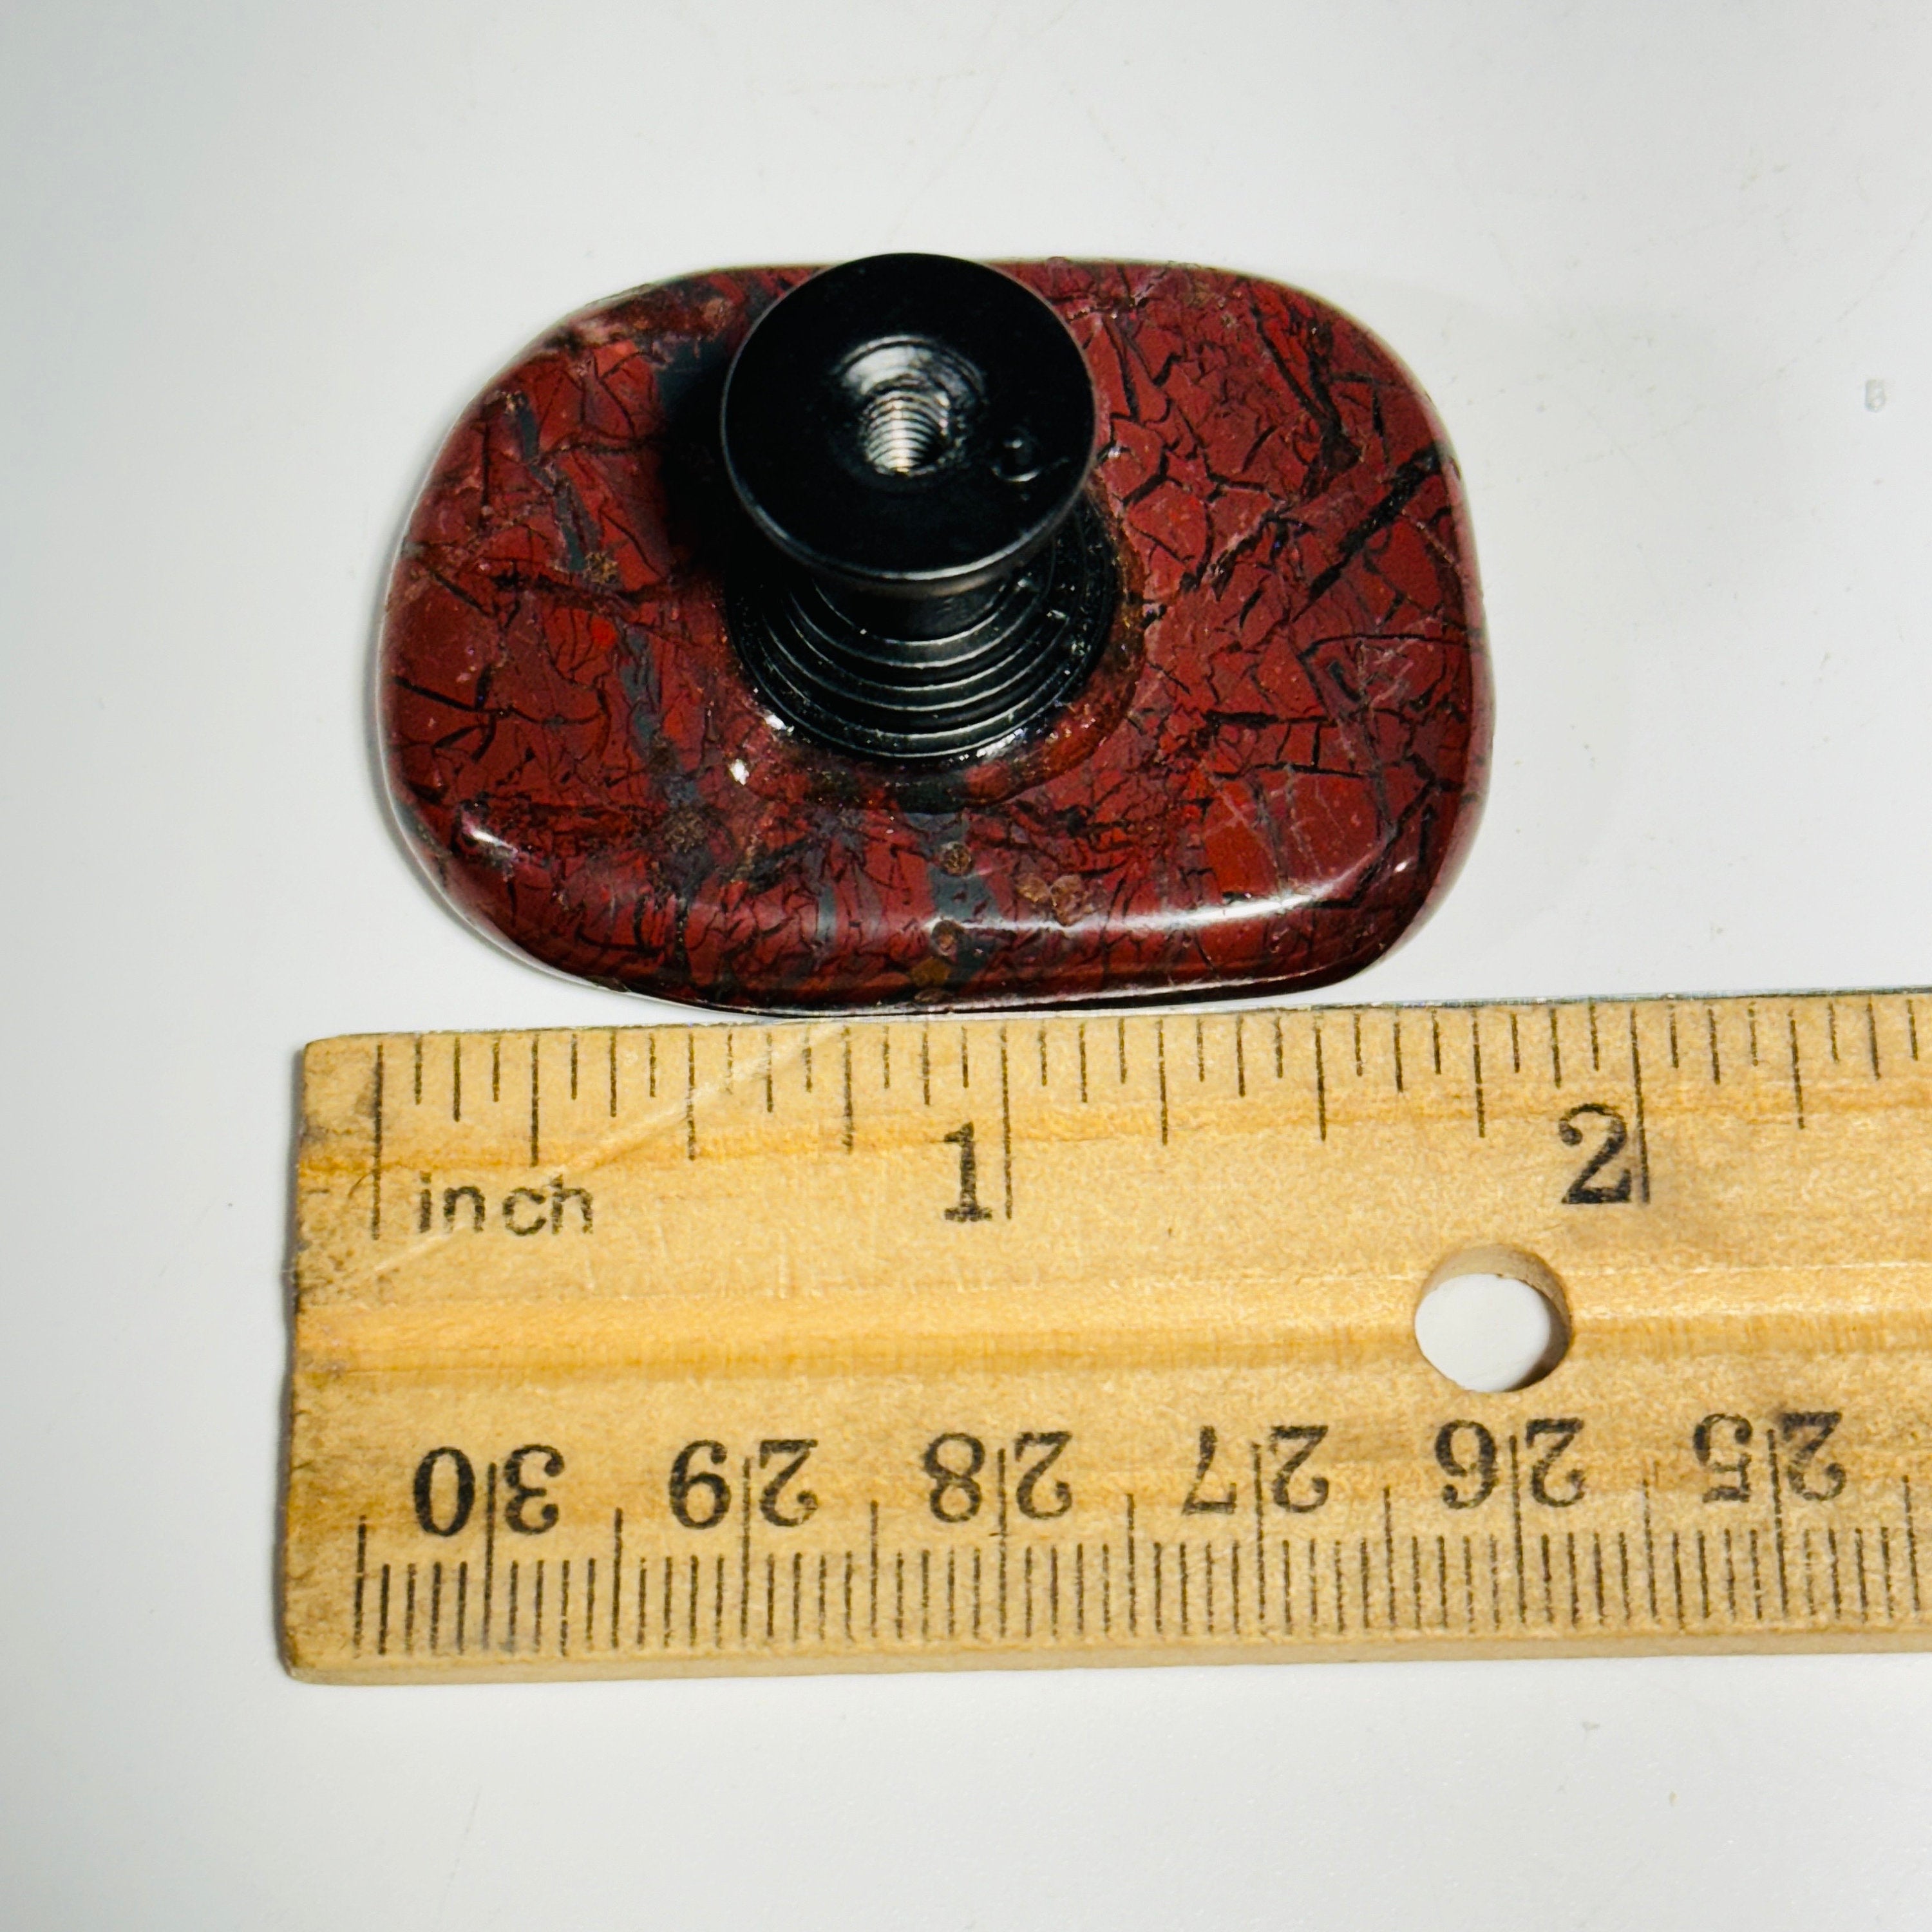 Polished brecciated jasper knobs